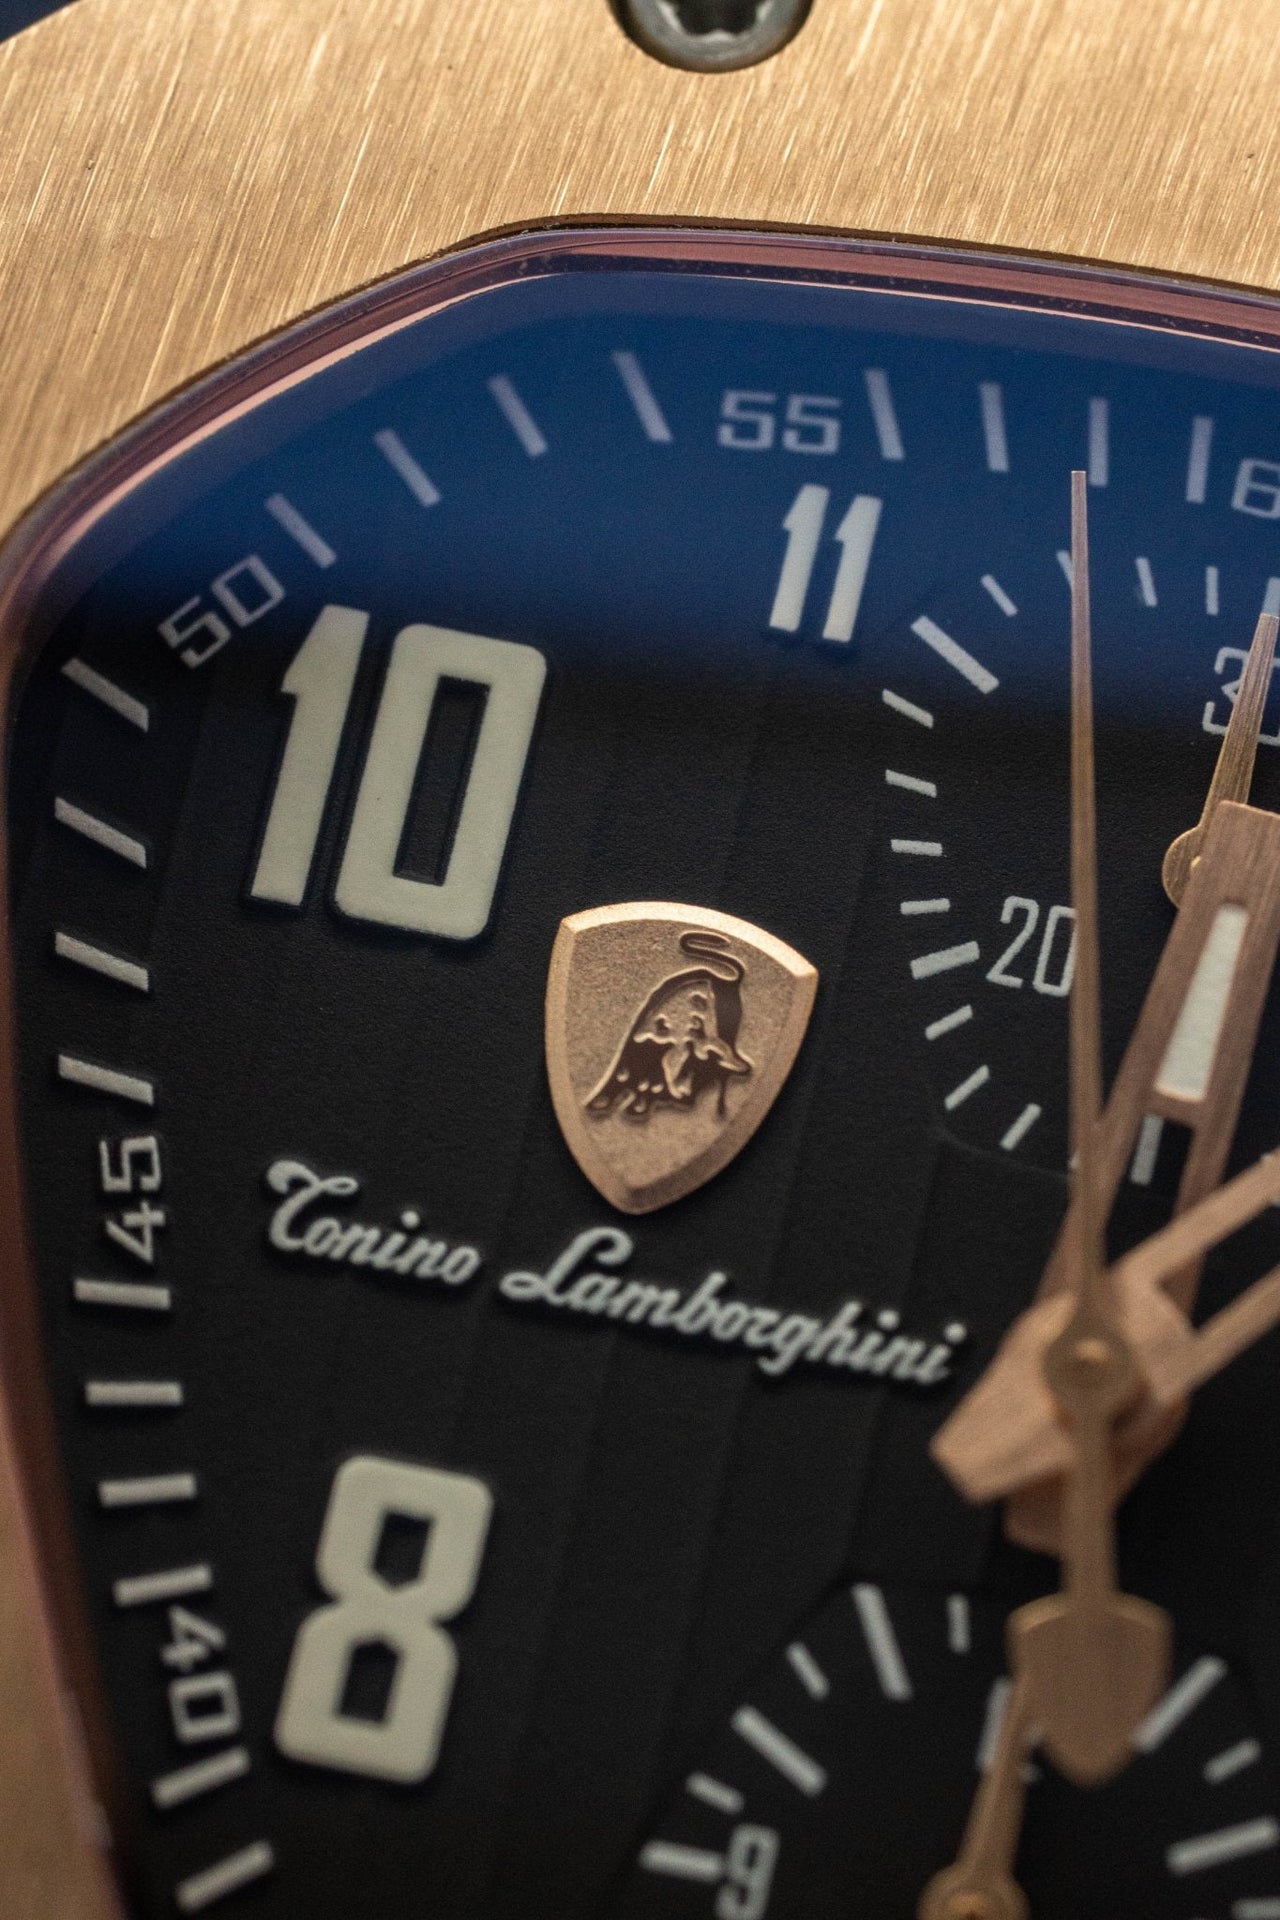 Tonino Lamborghini Spyderleggero Chronograph Day Date IP Rose Gold - Watches & Crystals